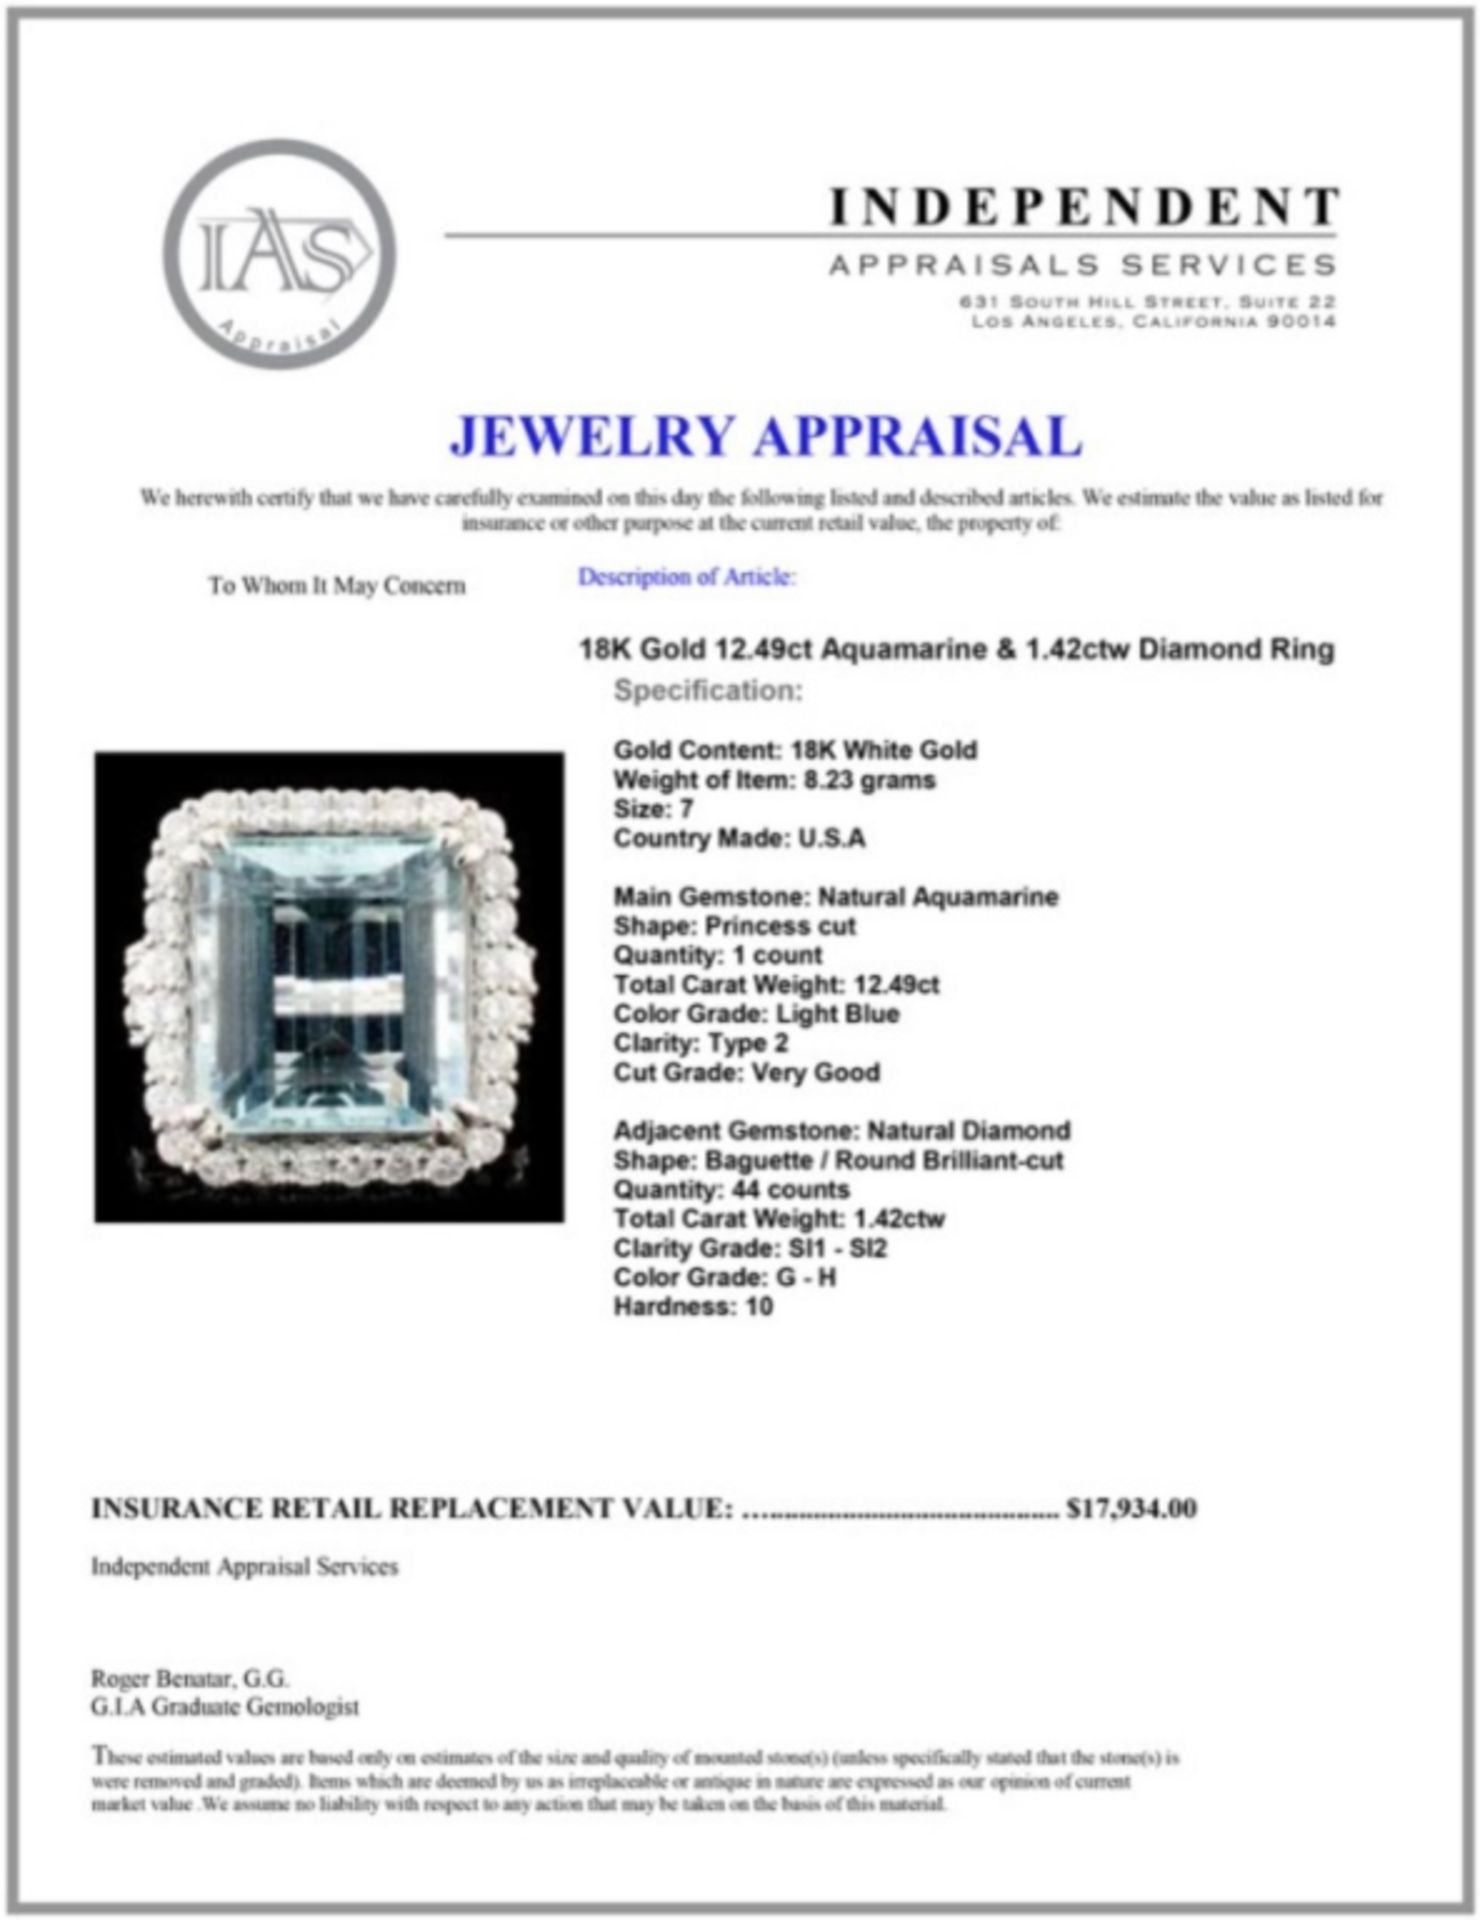 18K Gold 12.49ct Aquamarine & 1.42ctw Diamond Ring - Image 5 of 5